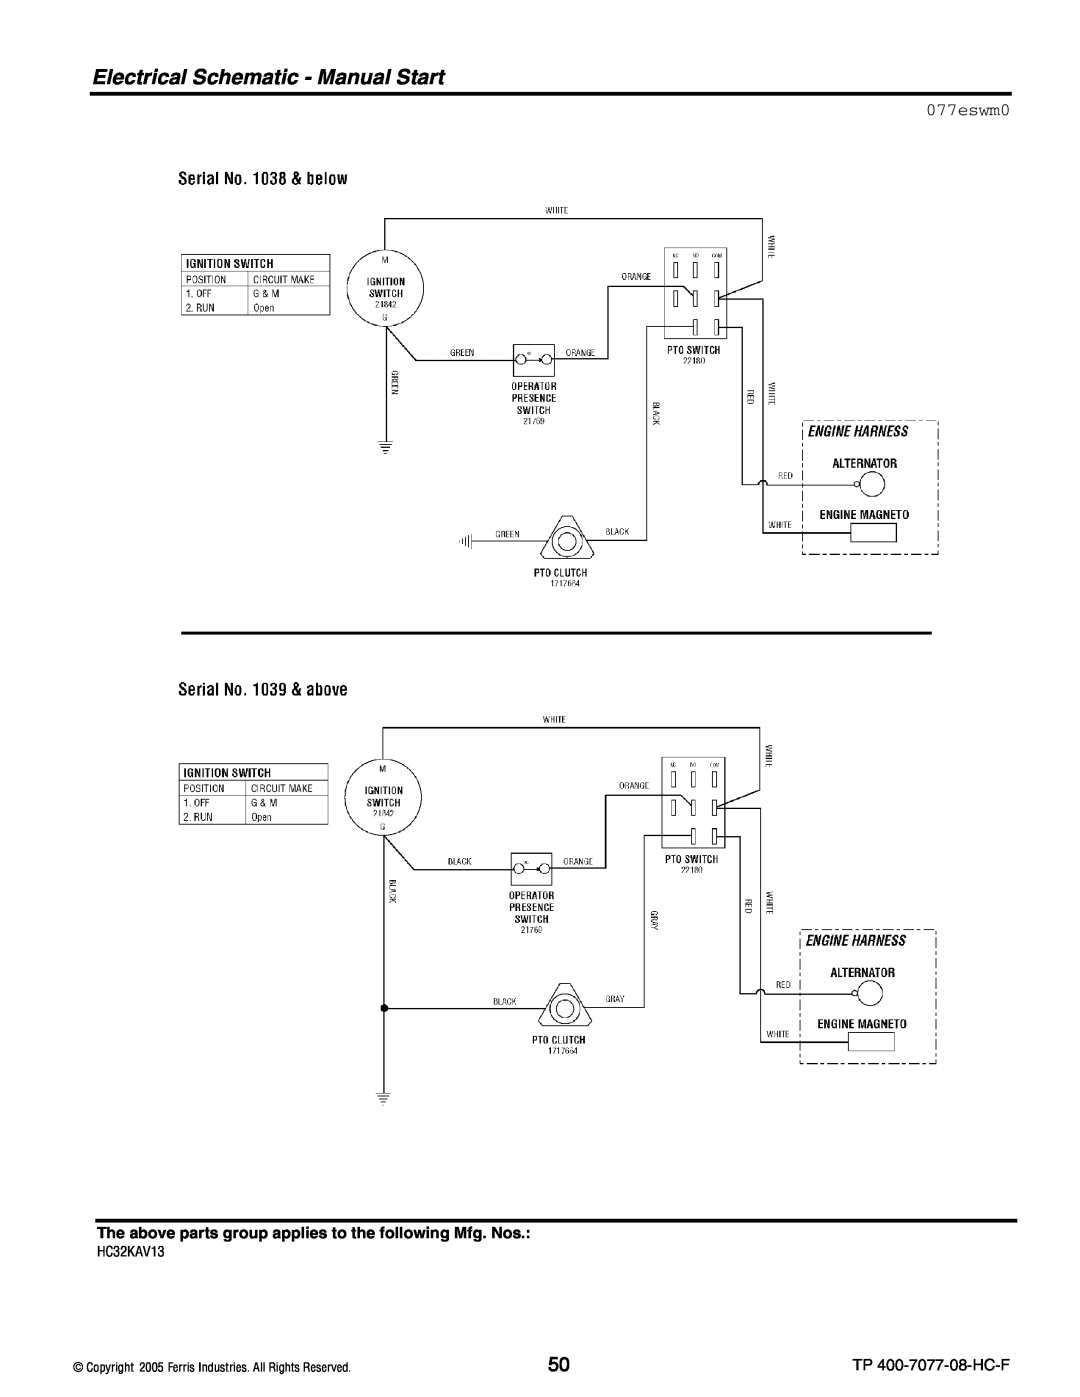 Ferris Industries HC32KAV13, HC36KAV13E manual Electrical Schematic - Manual Start, 077eswm0 